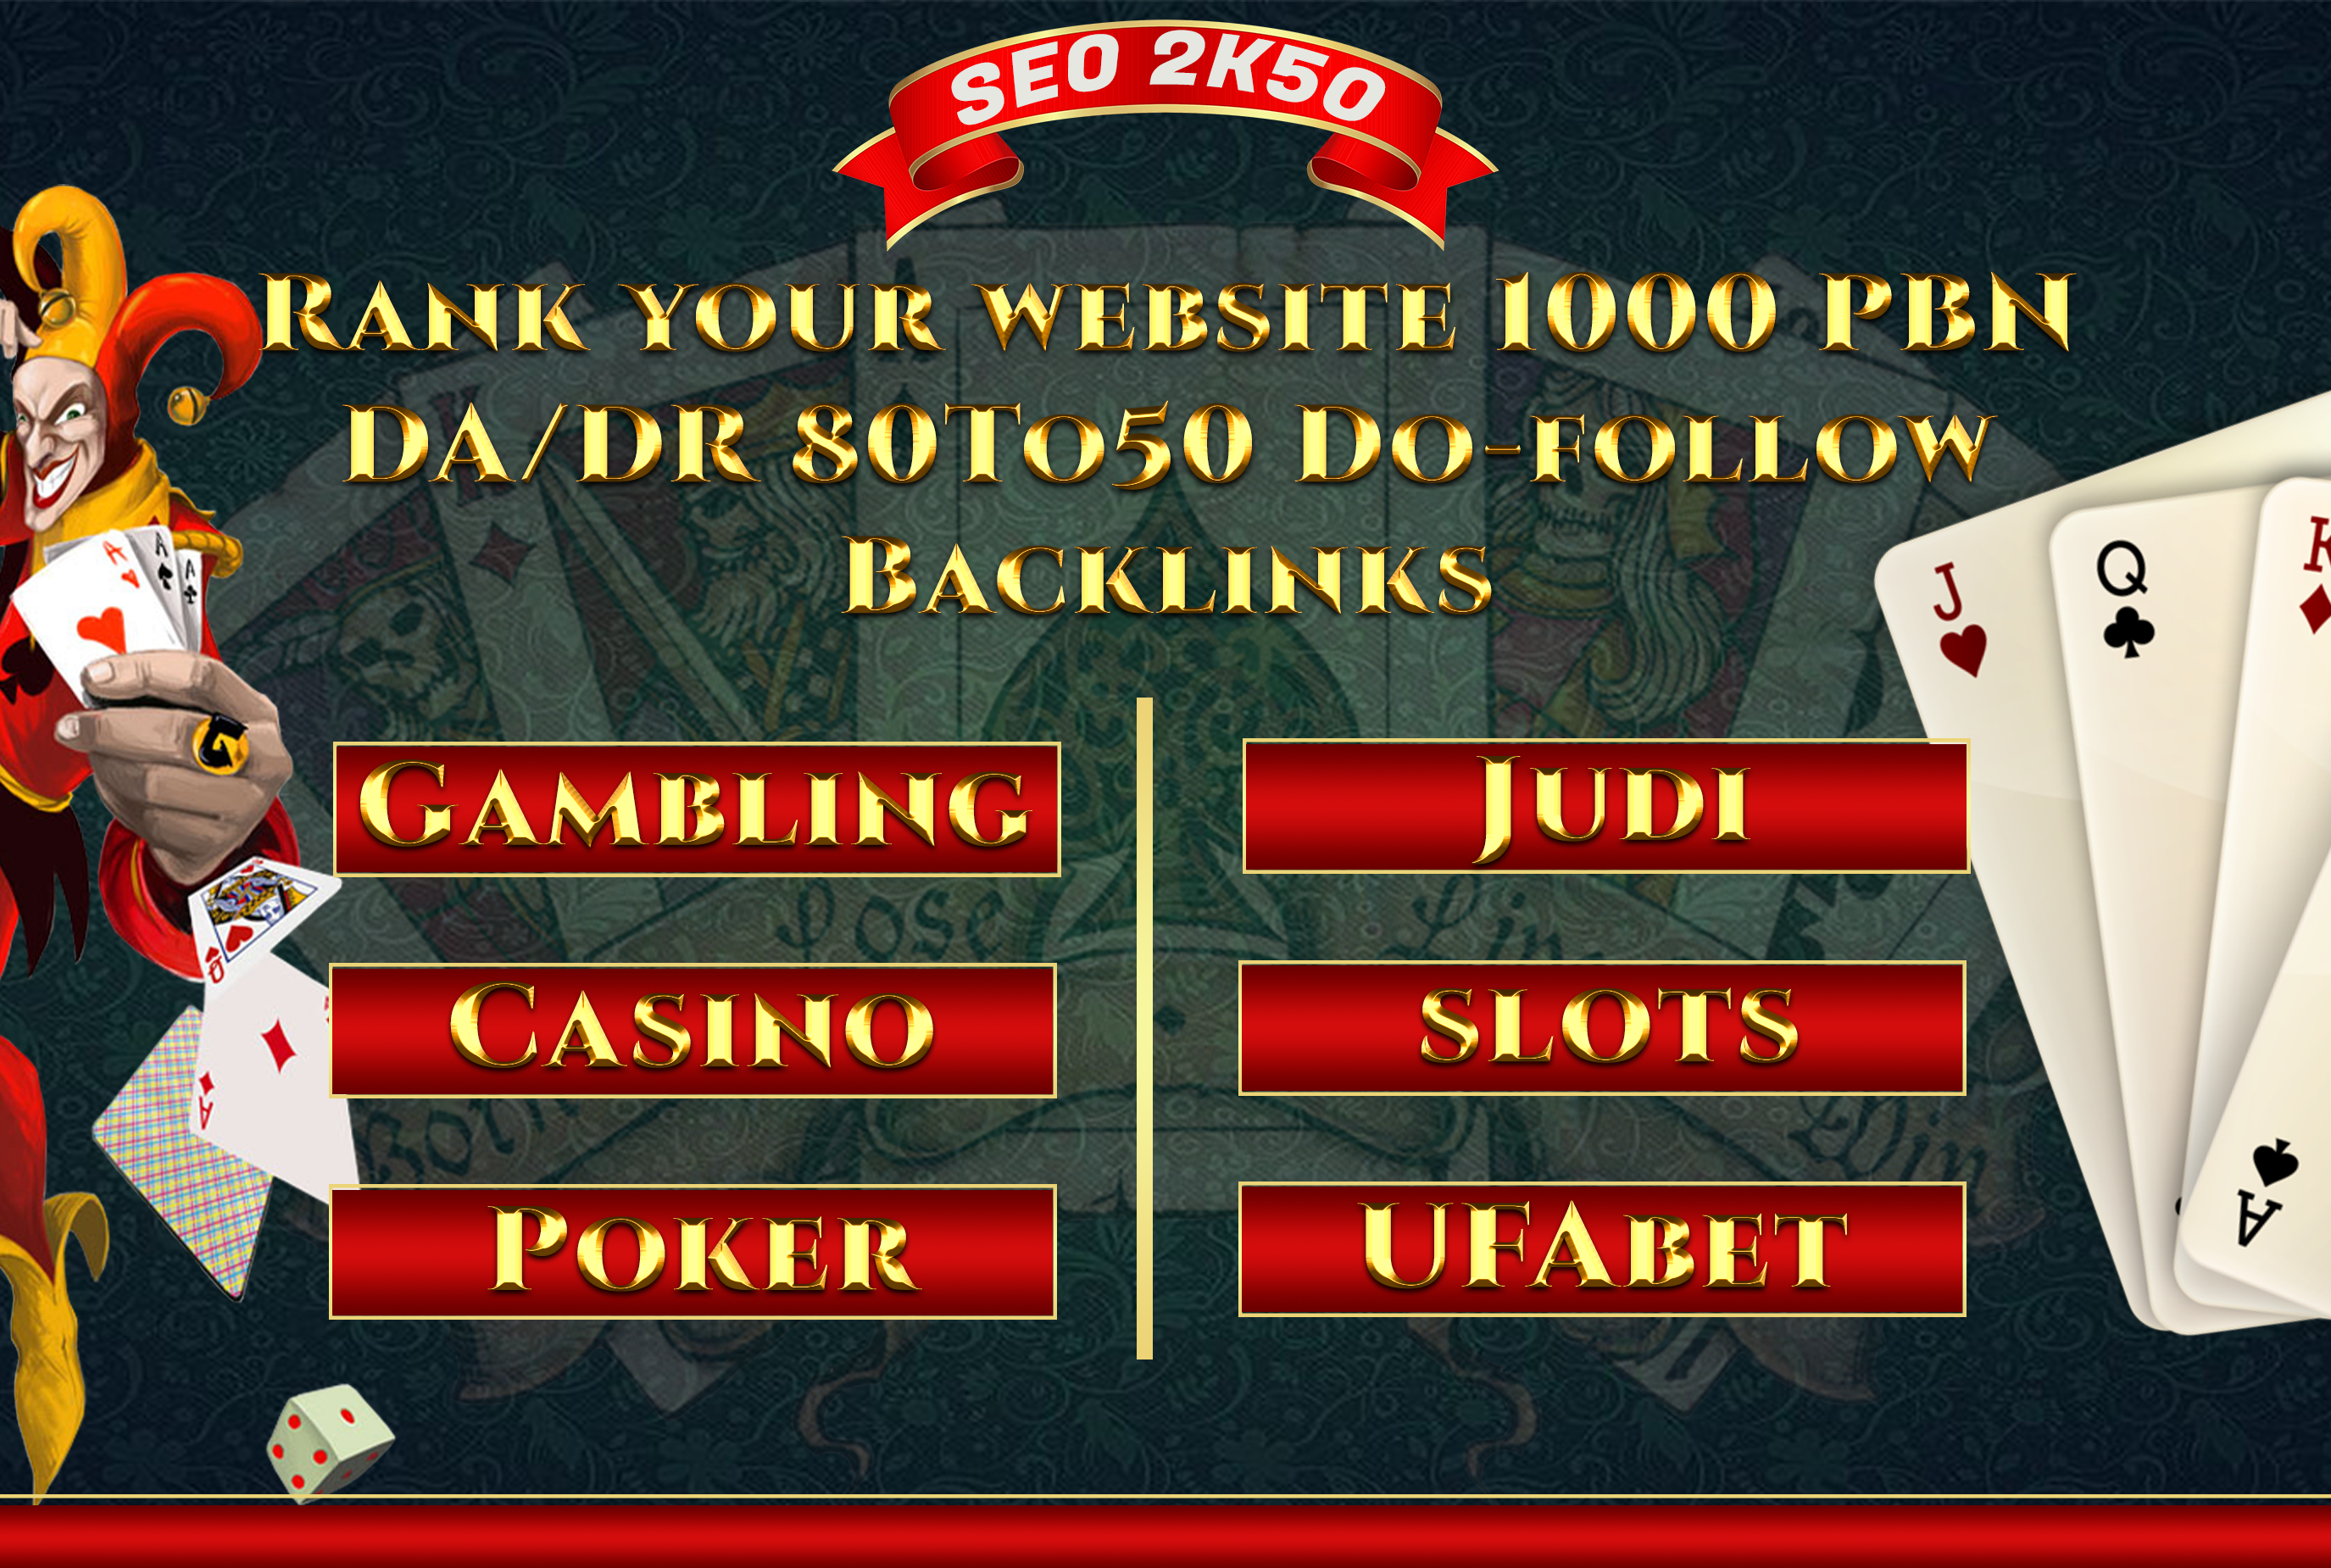 I will special 1000 PBN DA/DR 80To50 Thai/Korea/Indonesia Casino-Slot-UFABET-Poker-Betting Backlinks